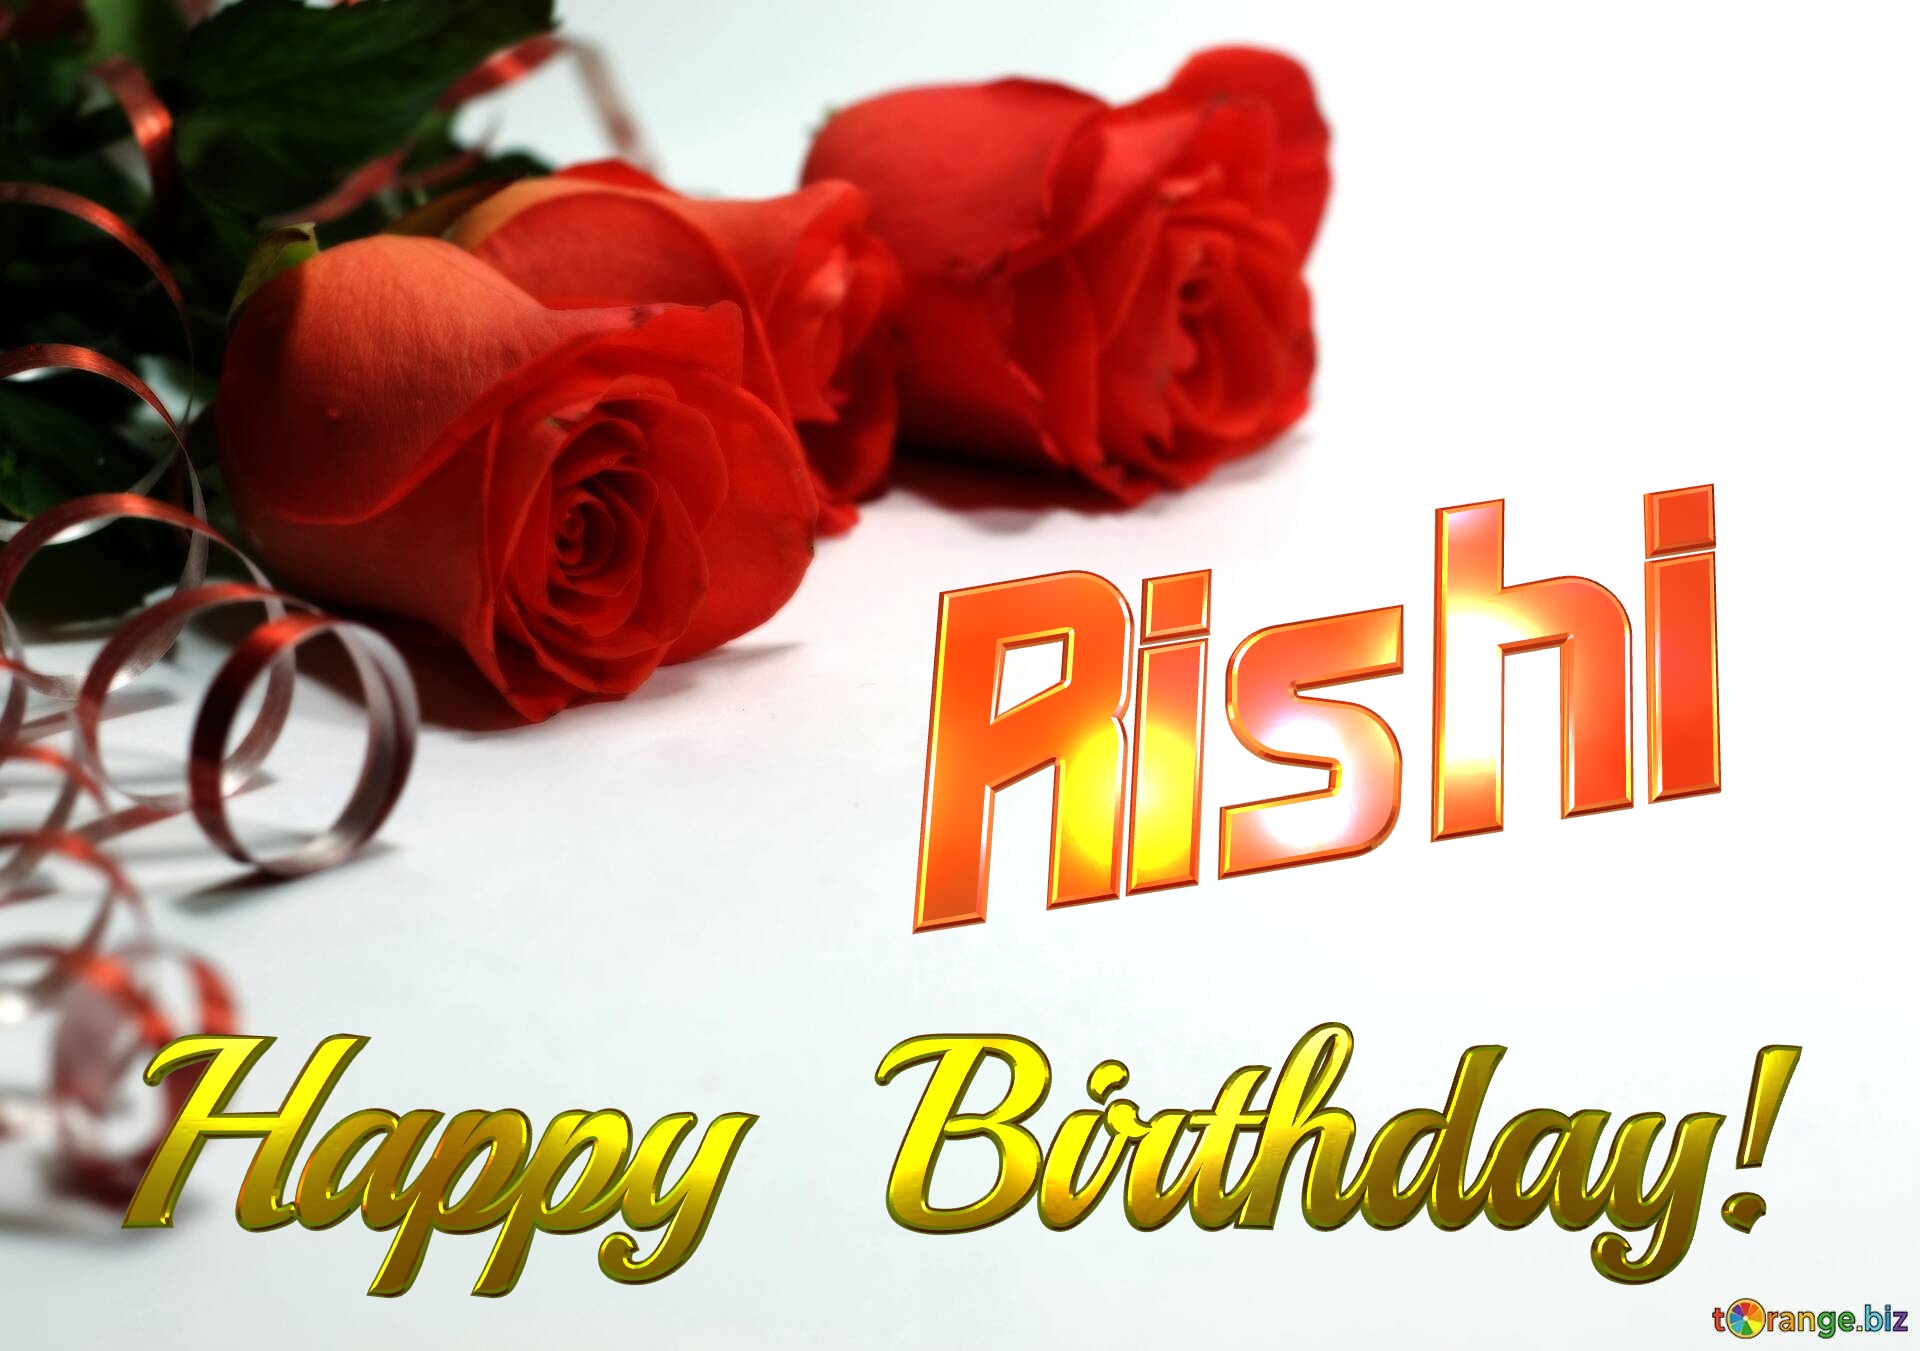 Rishi Happy Birthday Cakes Pics Gallery